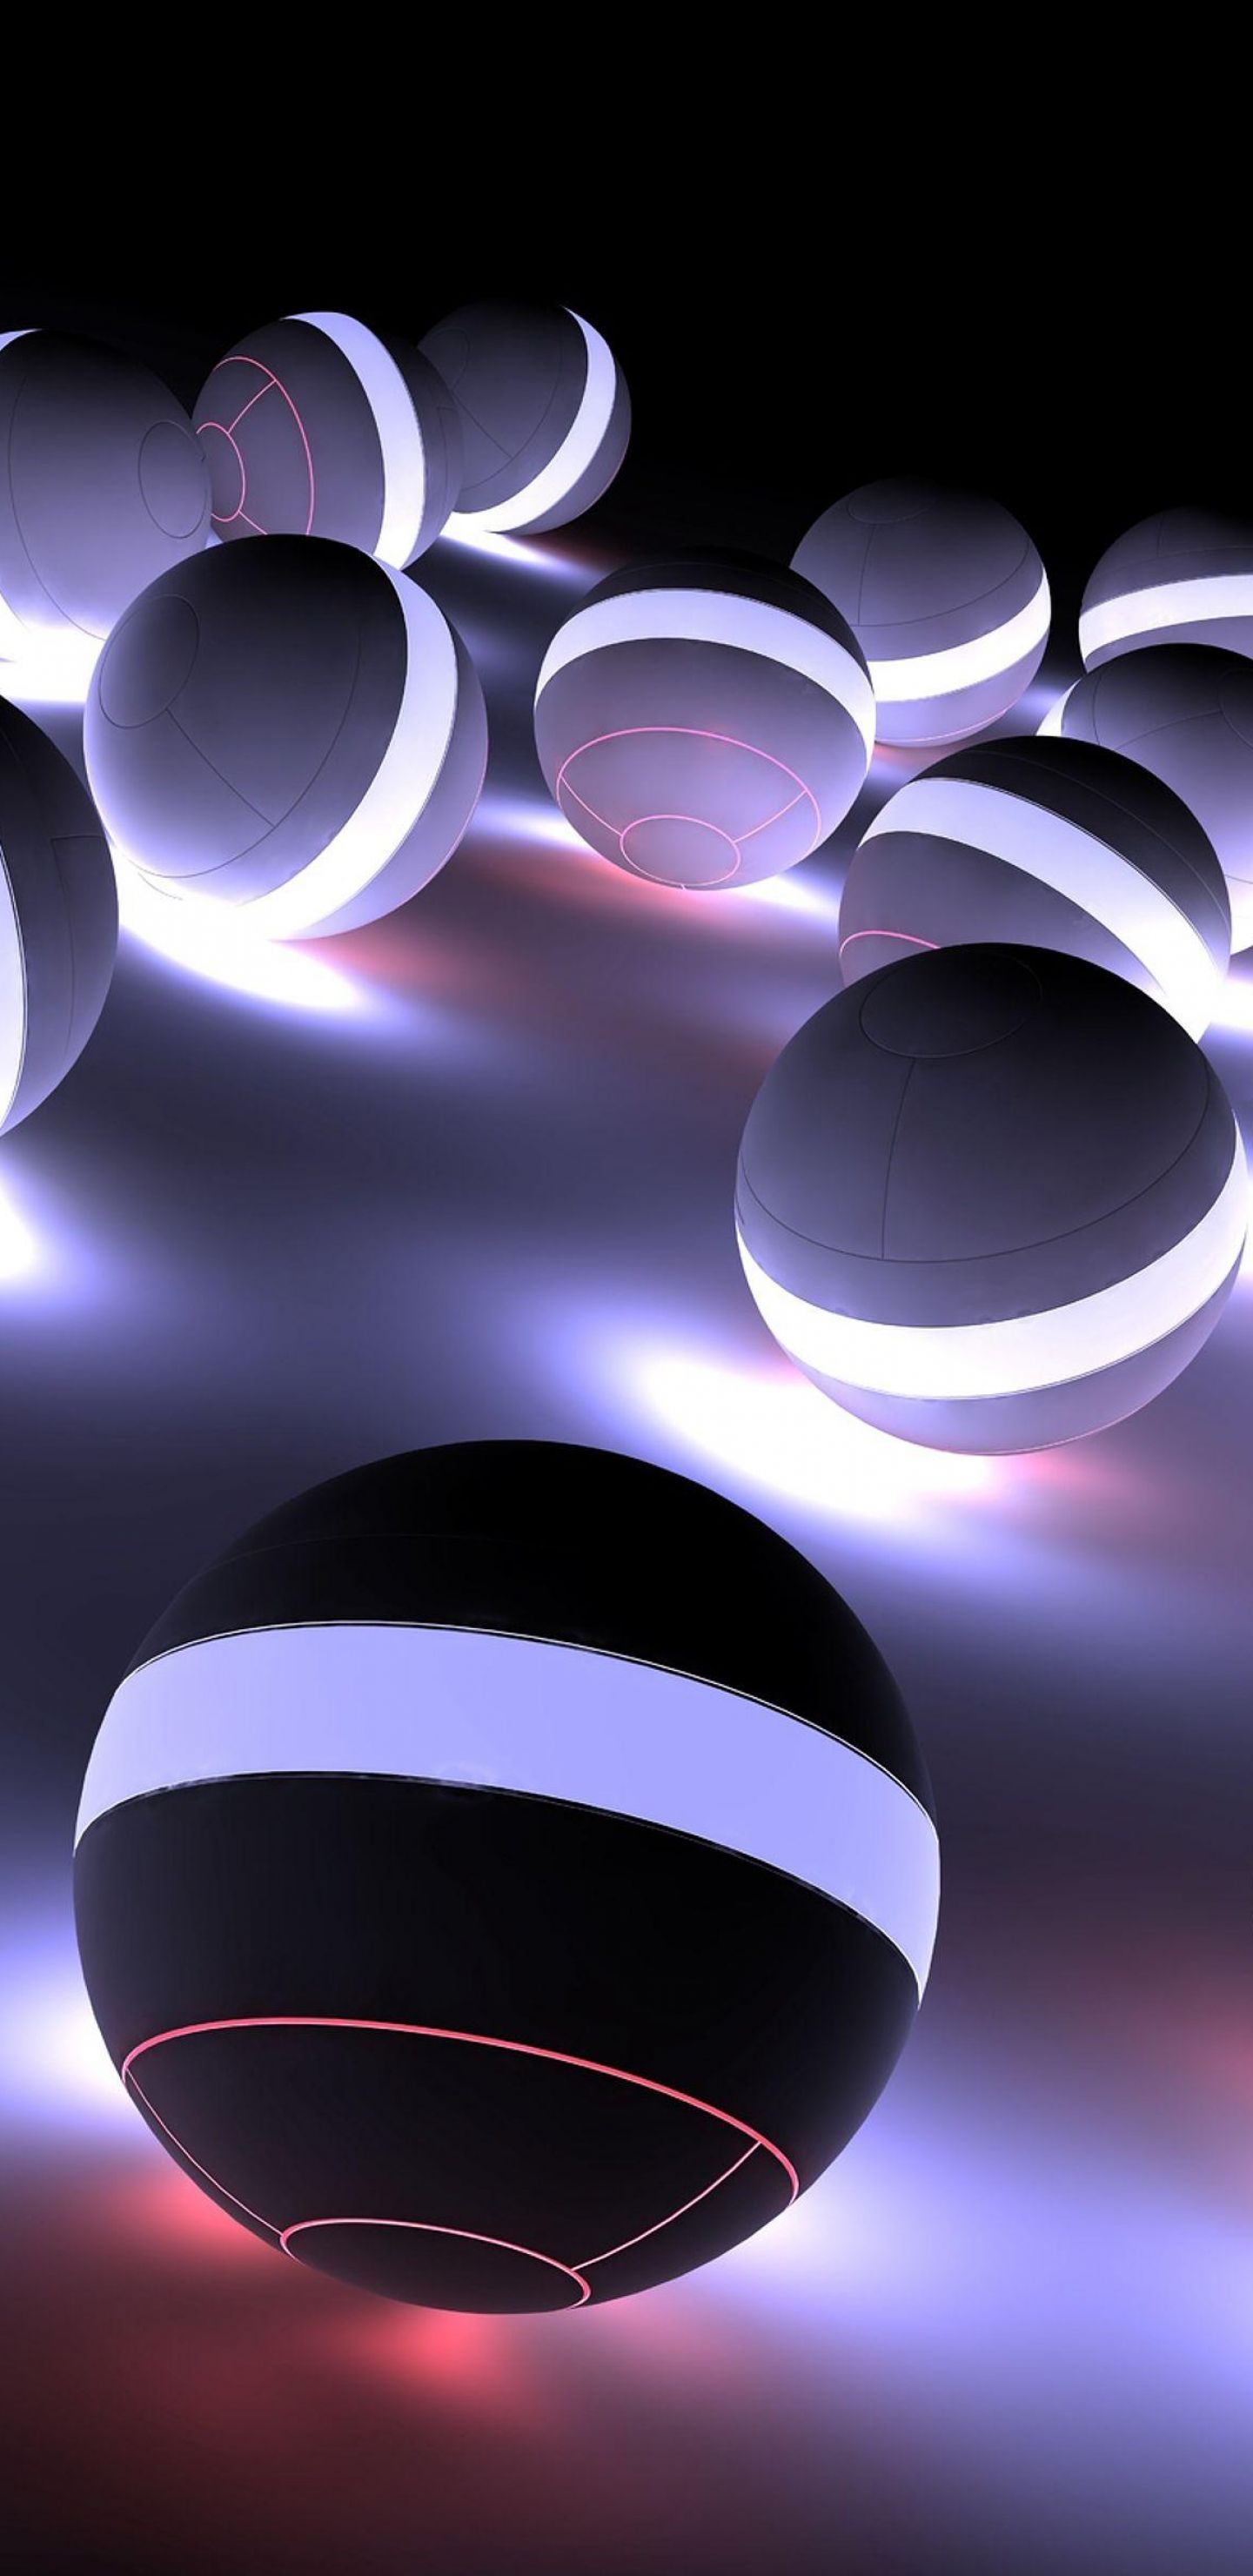 Illuminated Spheres 3d Desktop HD Wallpaper